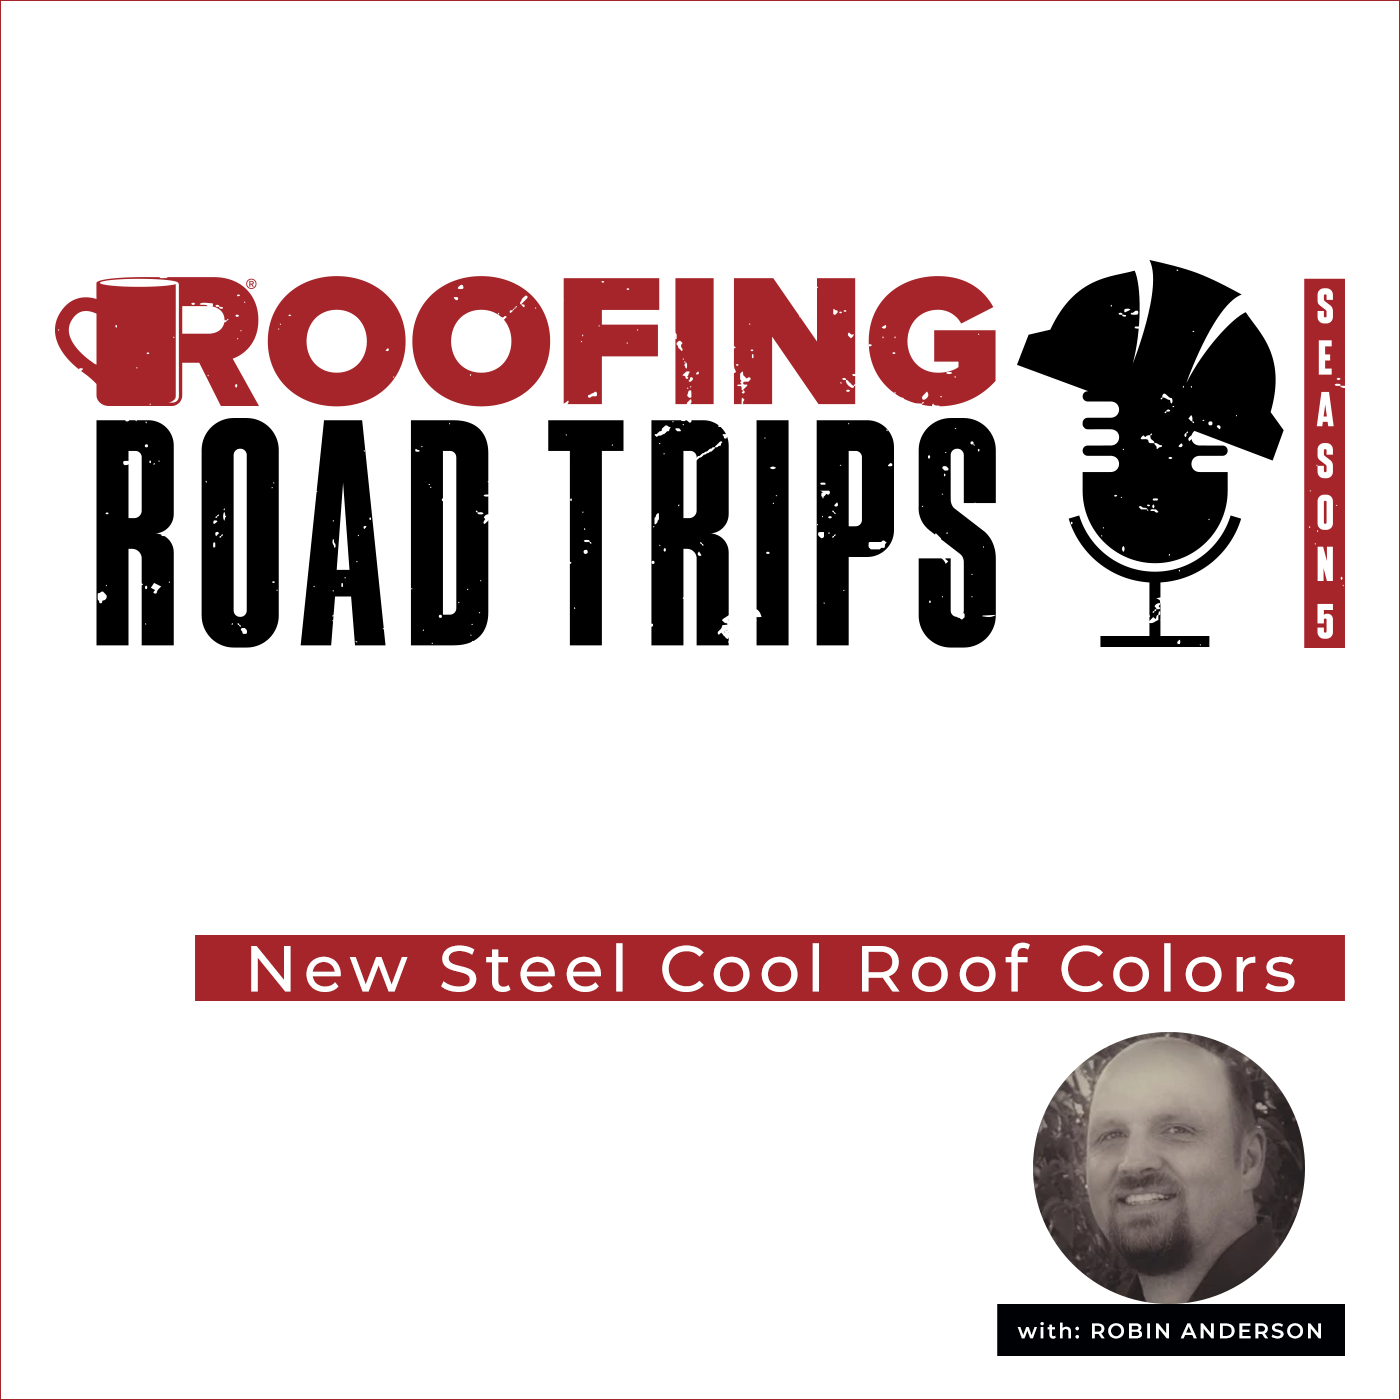 Westlake - Robin Anderson - New Steel Cool Roof Colors